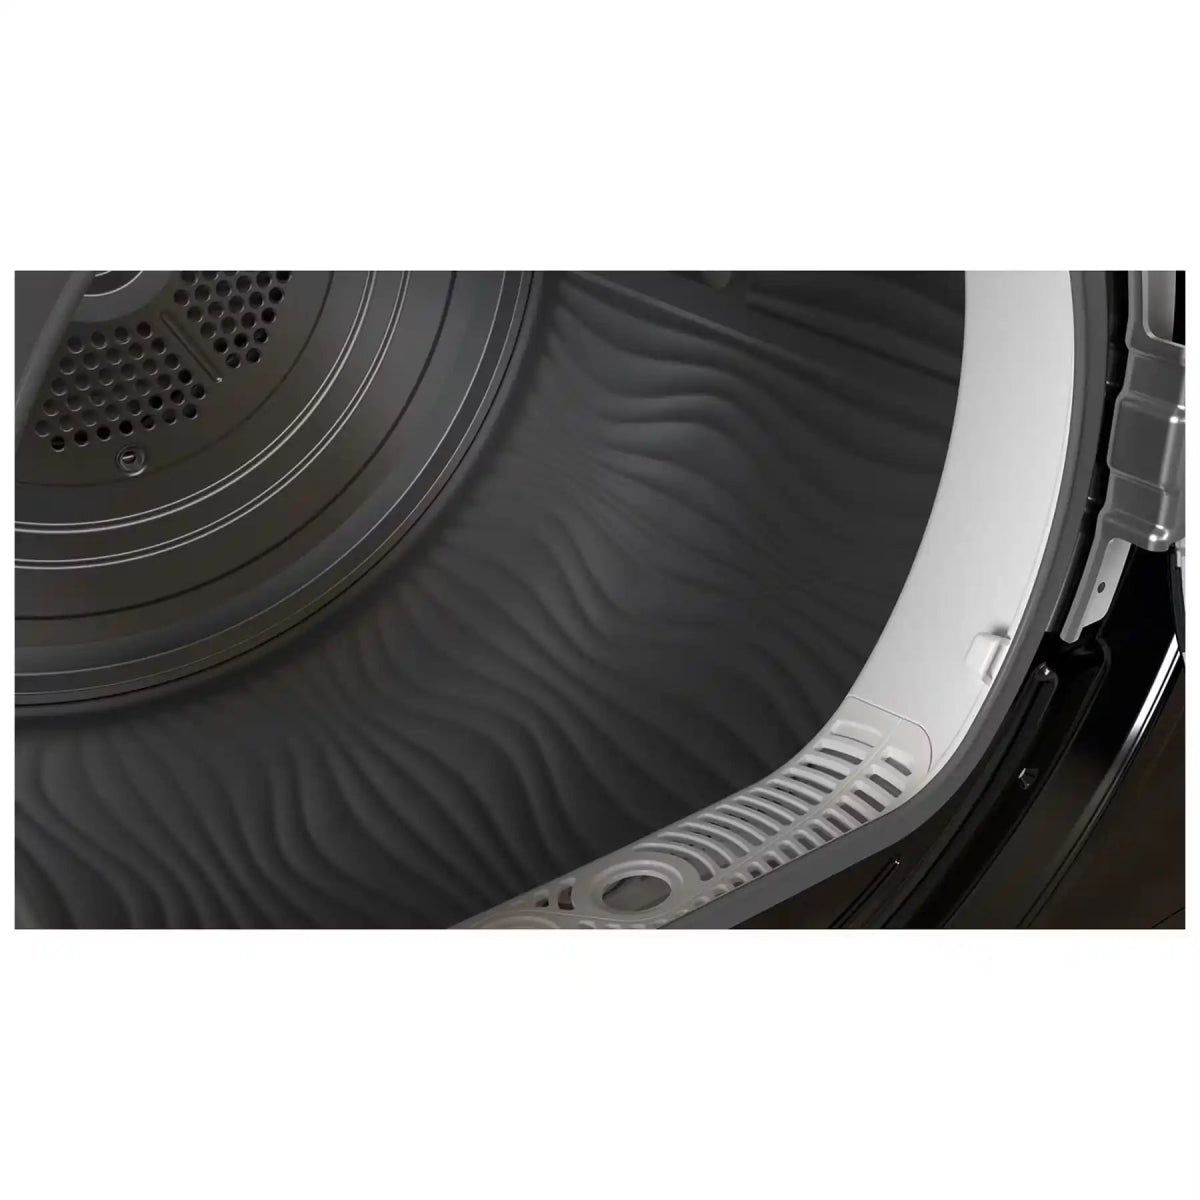 Hotpoint H3D91BUK 9Kg Freestanding Condenser Tumble Dryer - Black | Atlantic Electrics